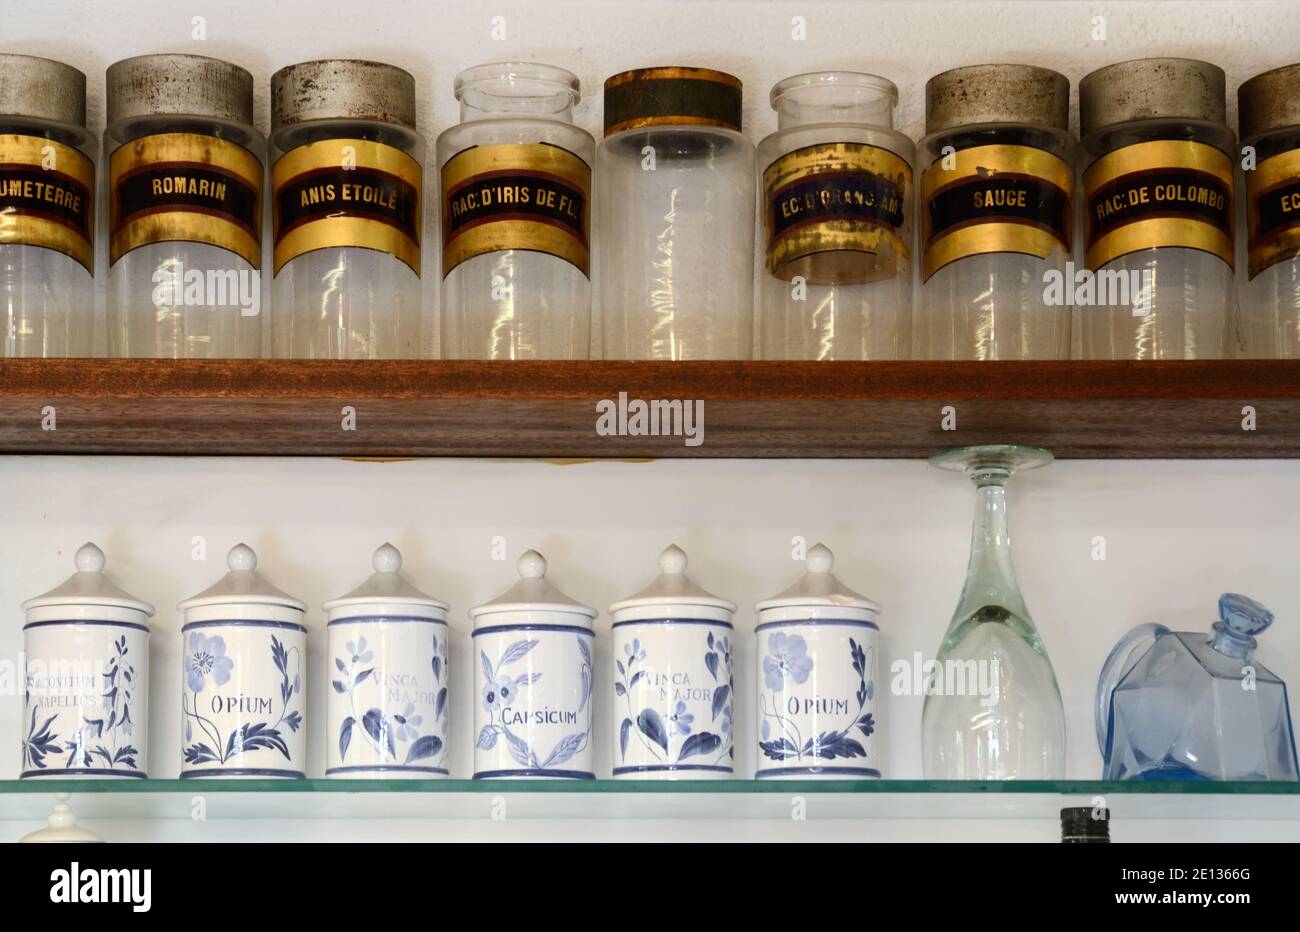 Display of Old or Vintage Apothecary Jars, Medicinal Jars, Drug Jars or Herb Jars incl. Storage Jars for Opium & Capsicum on Shelves in Kitchen Stock Photo